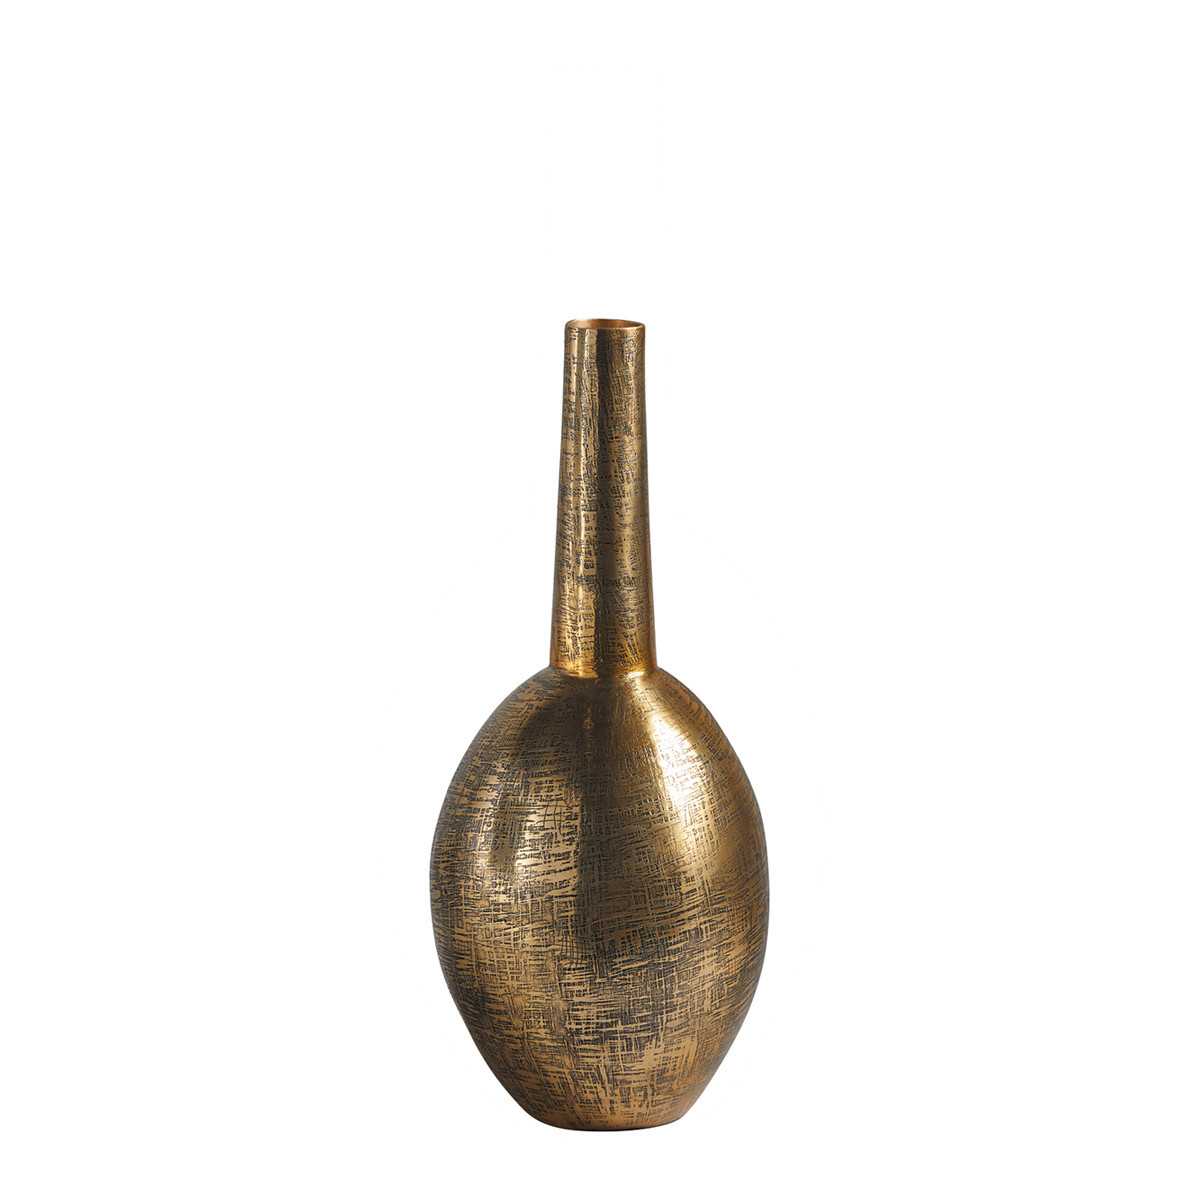 INTERIEUR- DECORATION|DELANO Vase - Small modelBLANC D'IVOIREVases